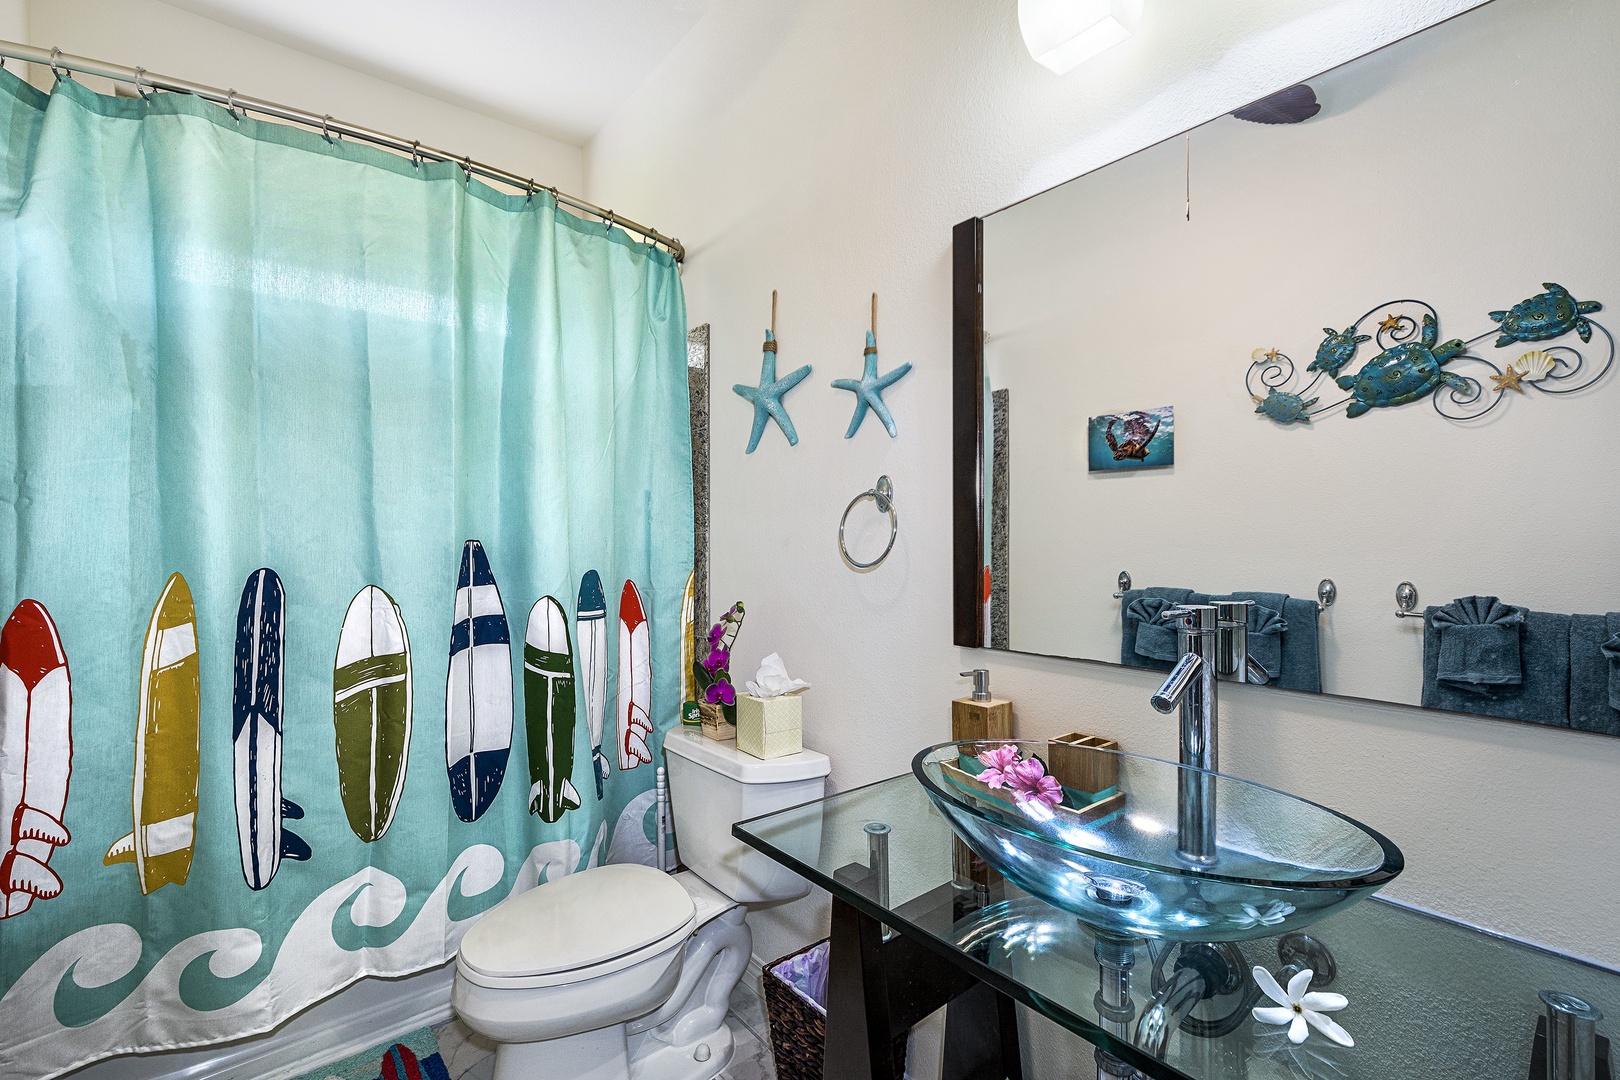 Kailua Kona Vacation Rentals, Maile Hale - Guest bathroom with tub/shower combo